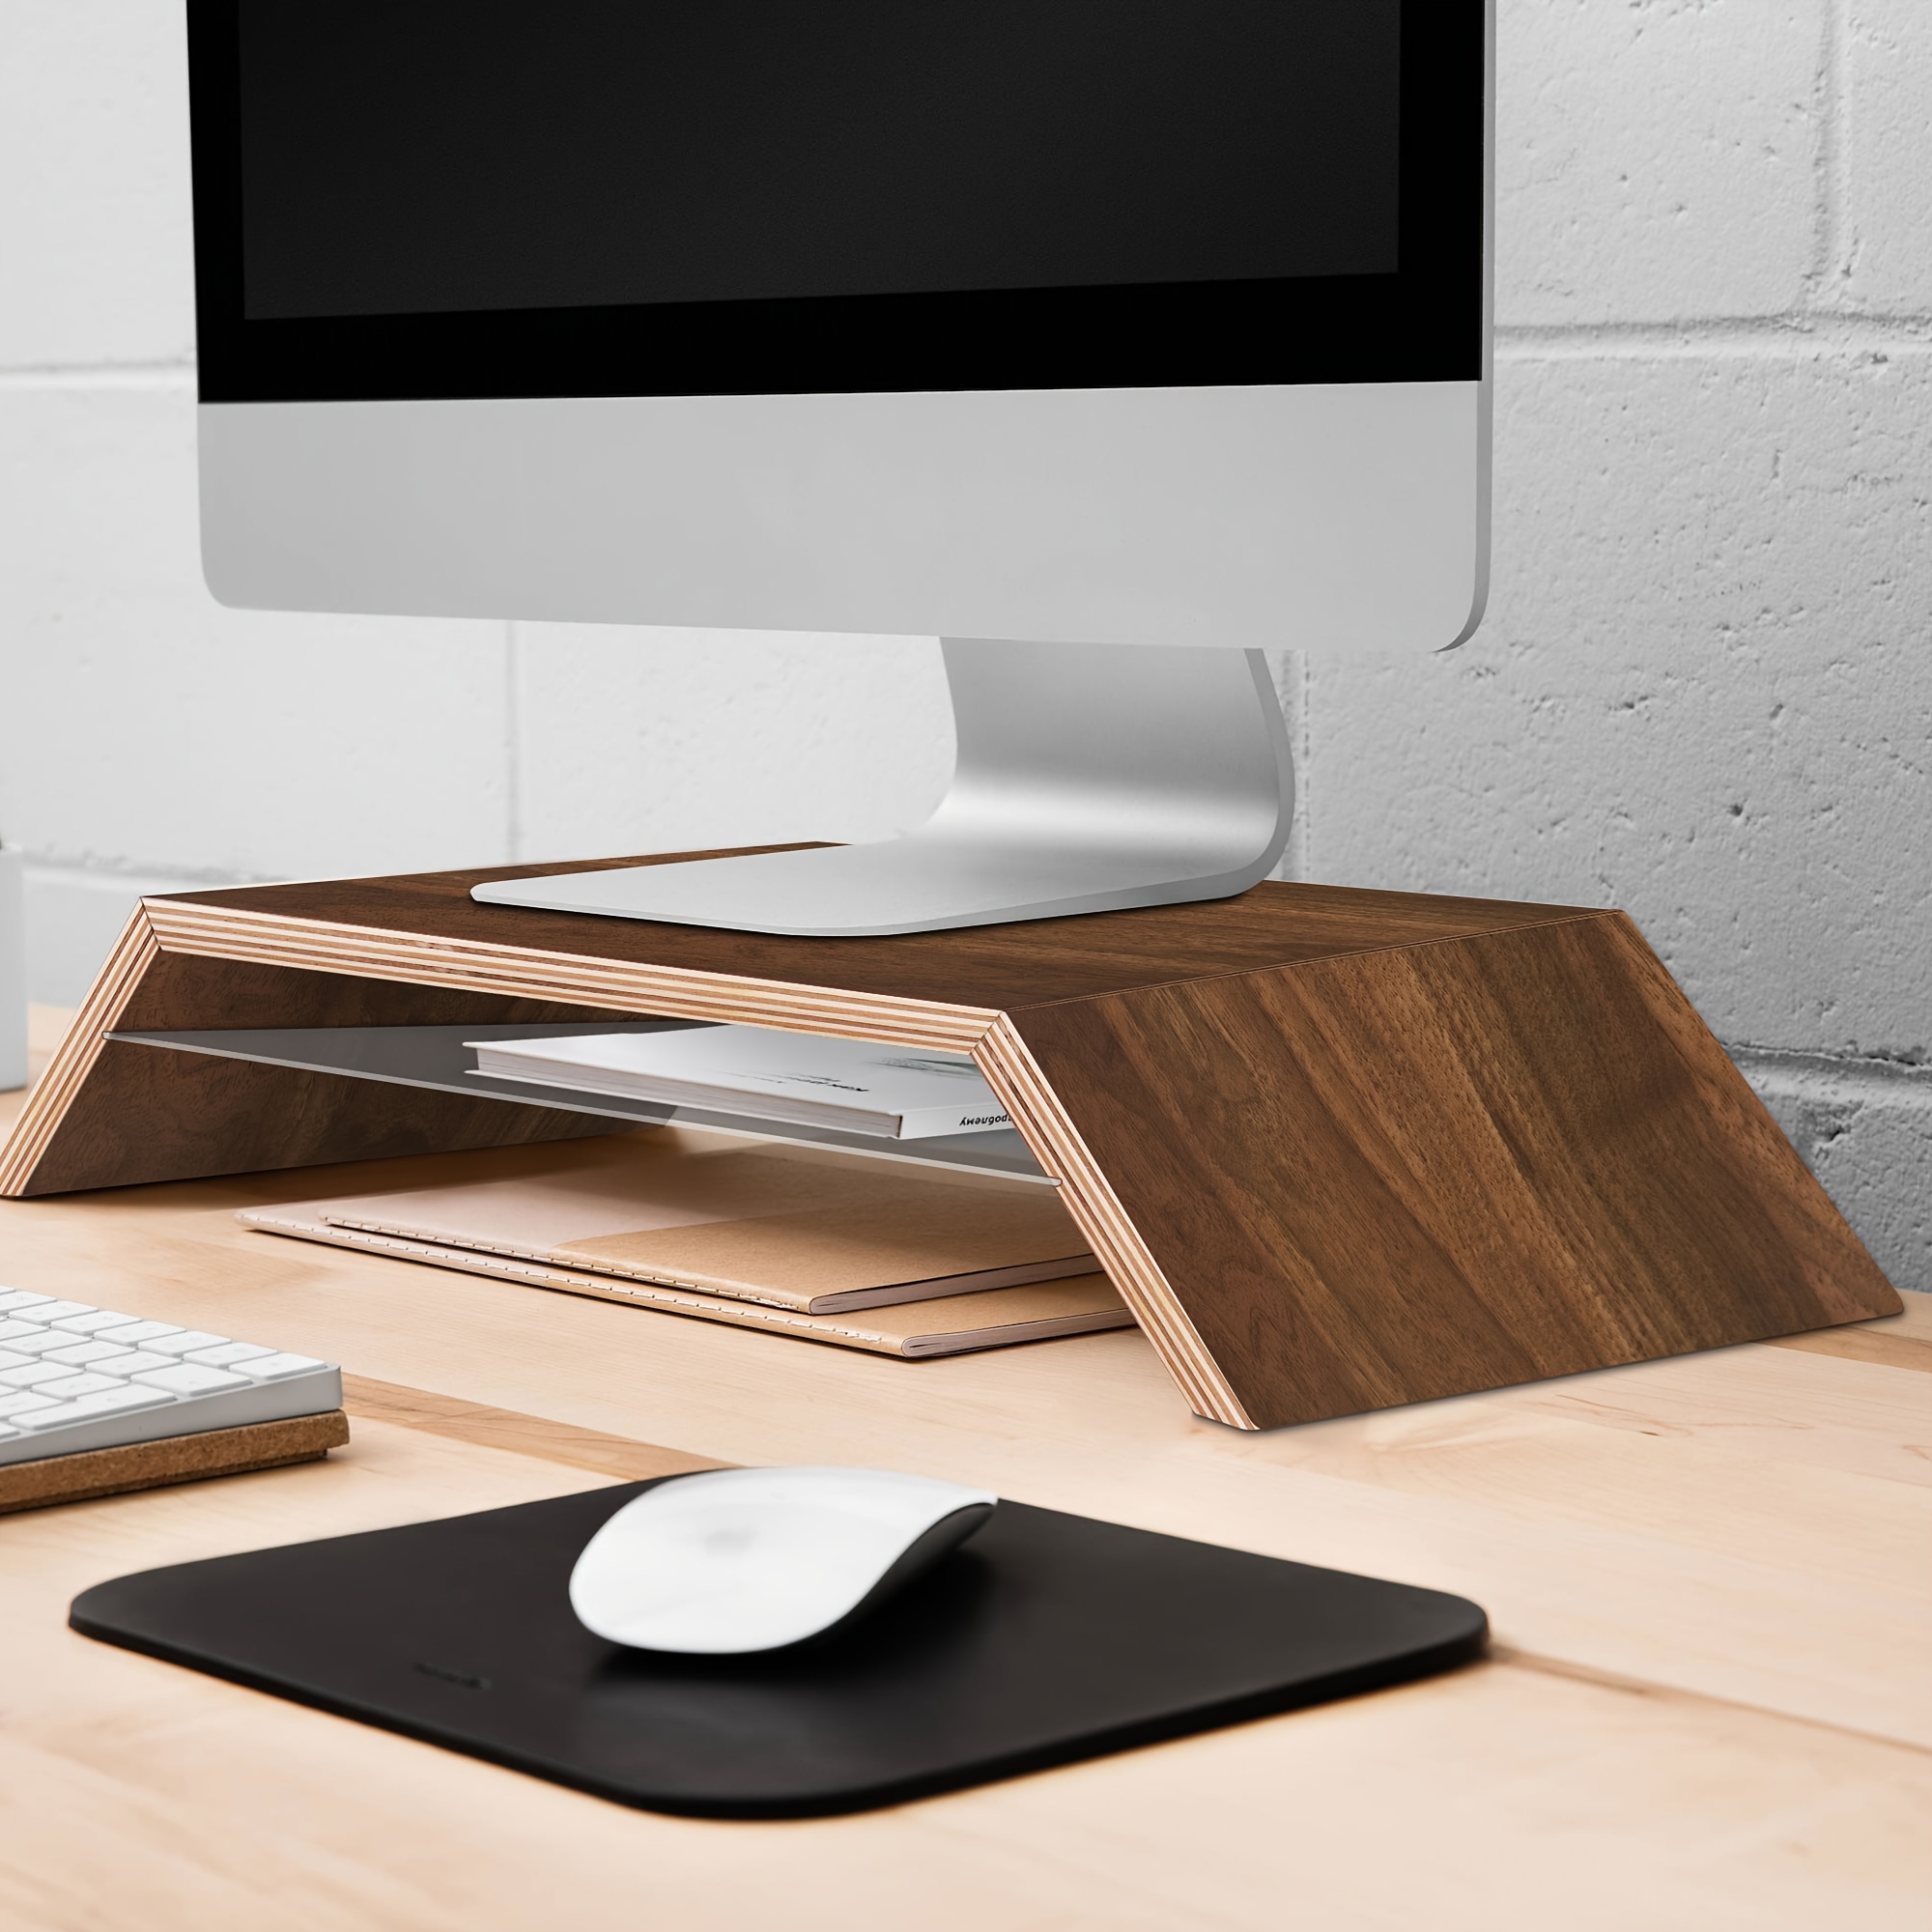 Soporte para monitor de madera maciza, soporte de escritorio universal para  computadora portátil, impresora de TV, organizador de almacenamiento para